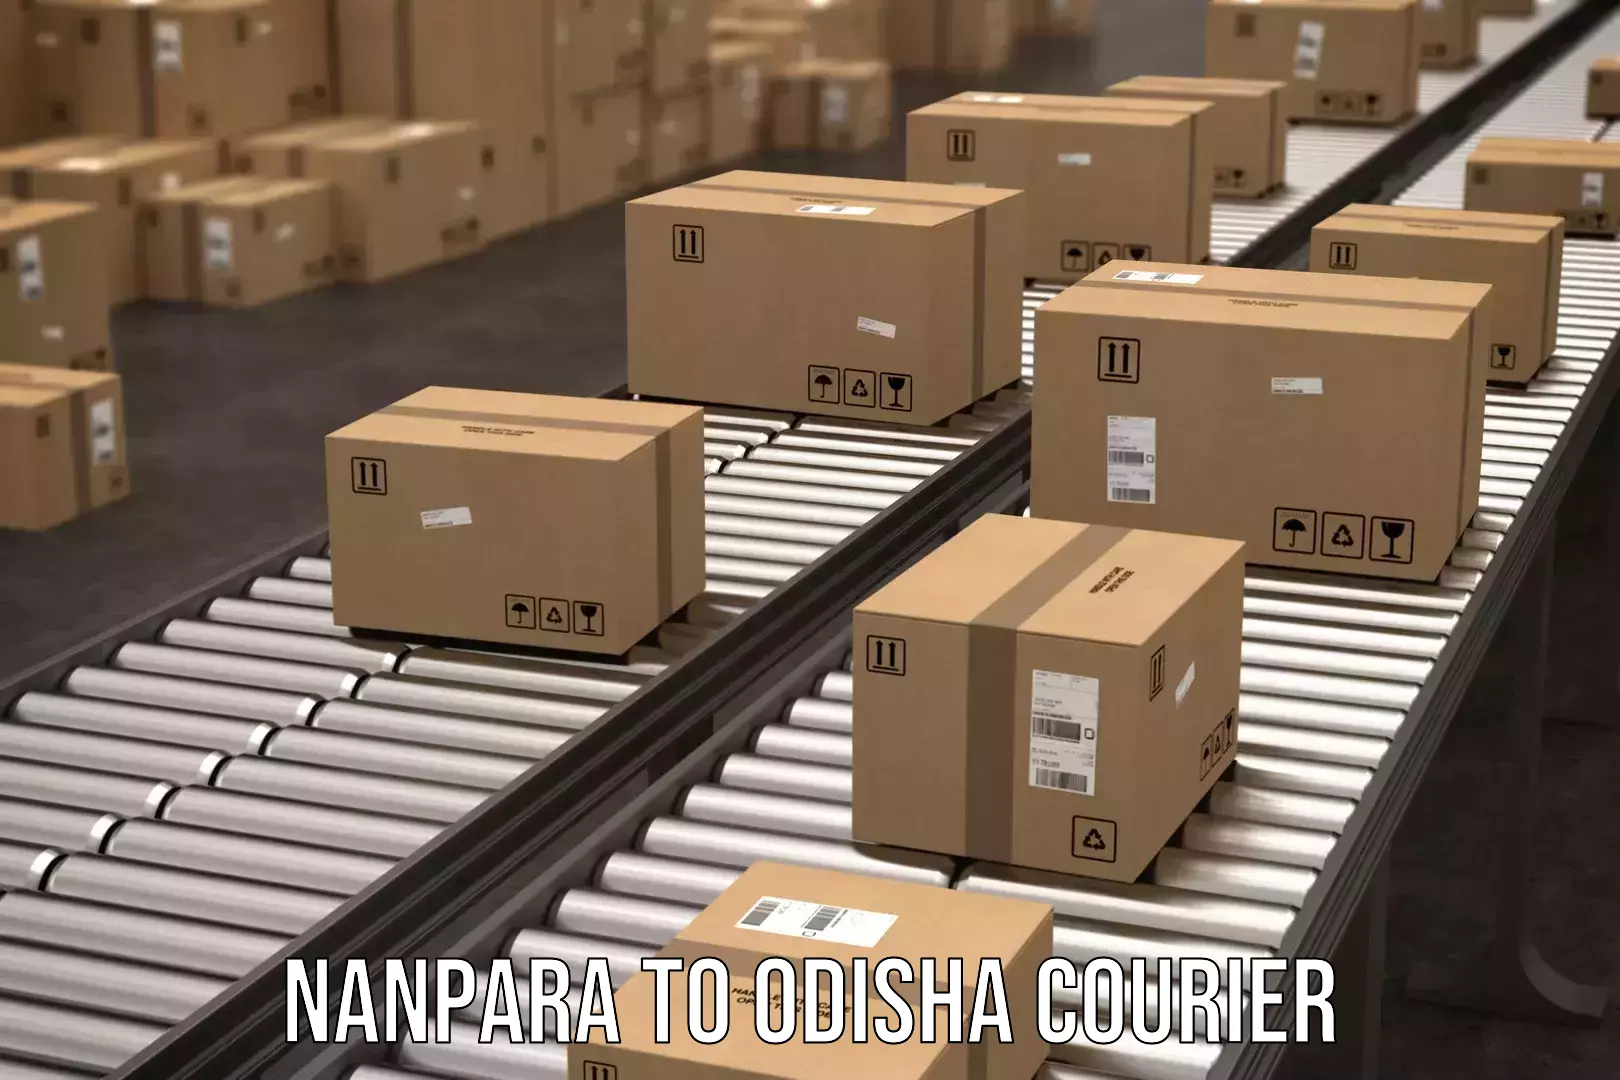 Courier service comparison Nanpara to Raikia